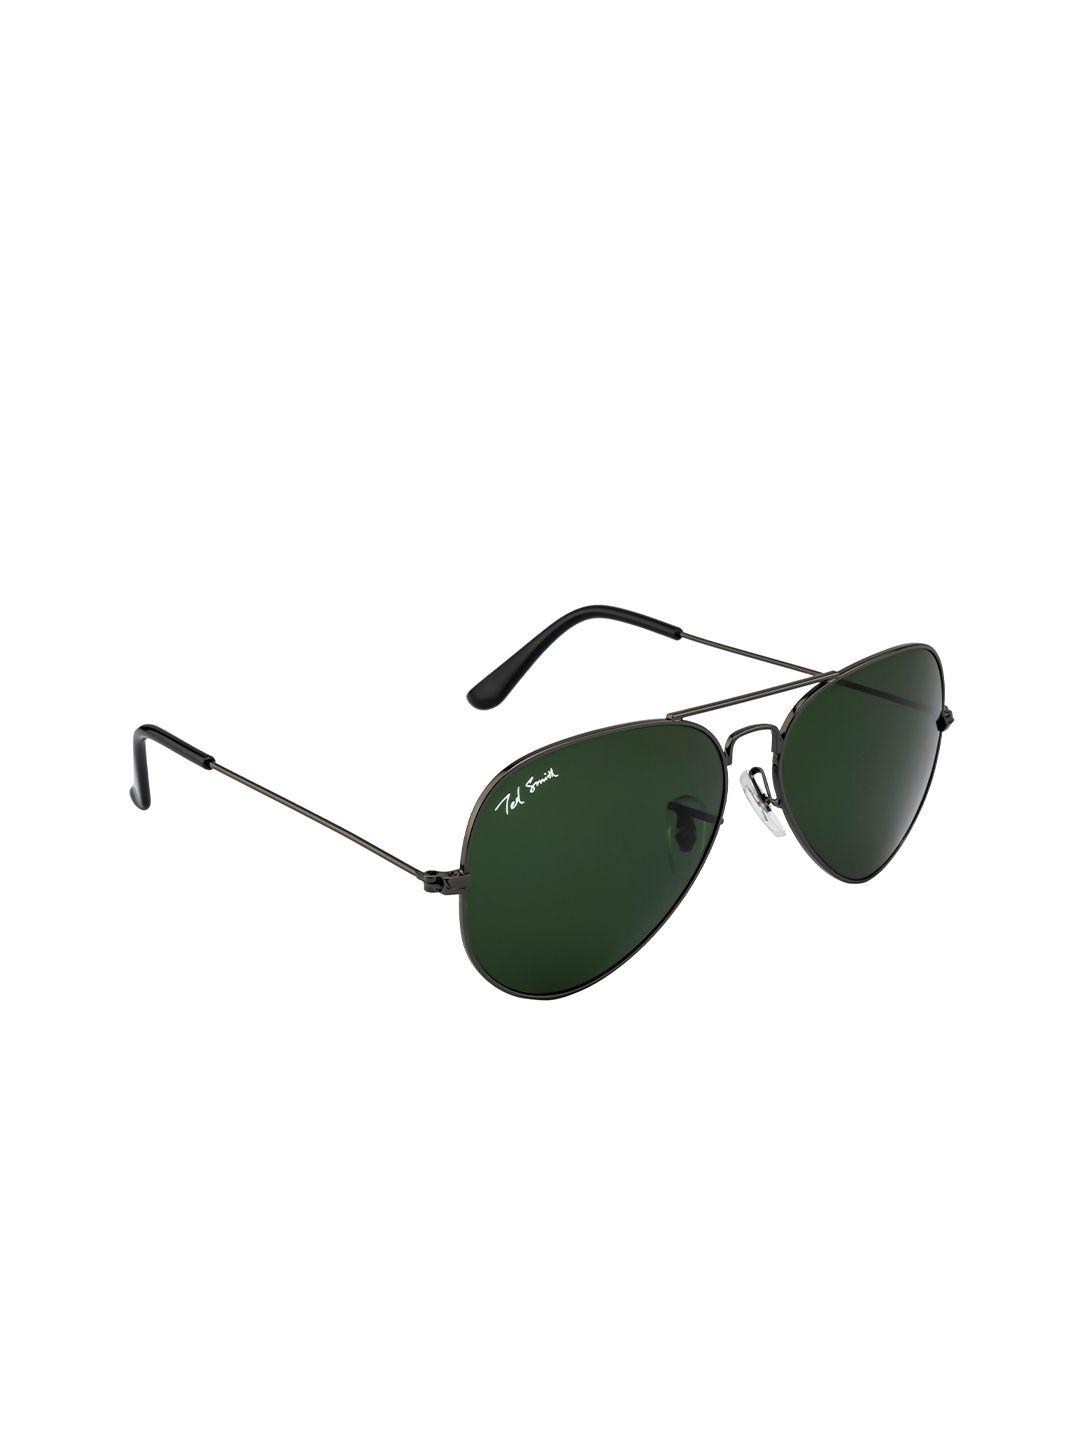 ted smith unisex green lens & black aviator sunglasses with uv protected lens avimast_c18